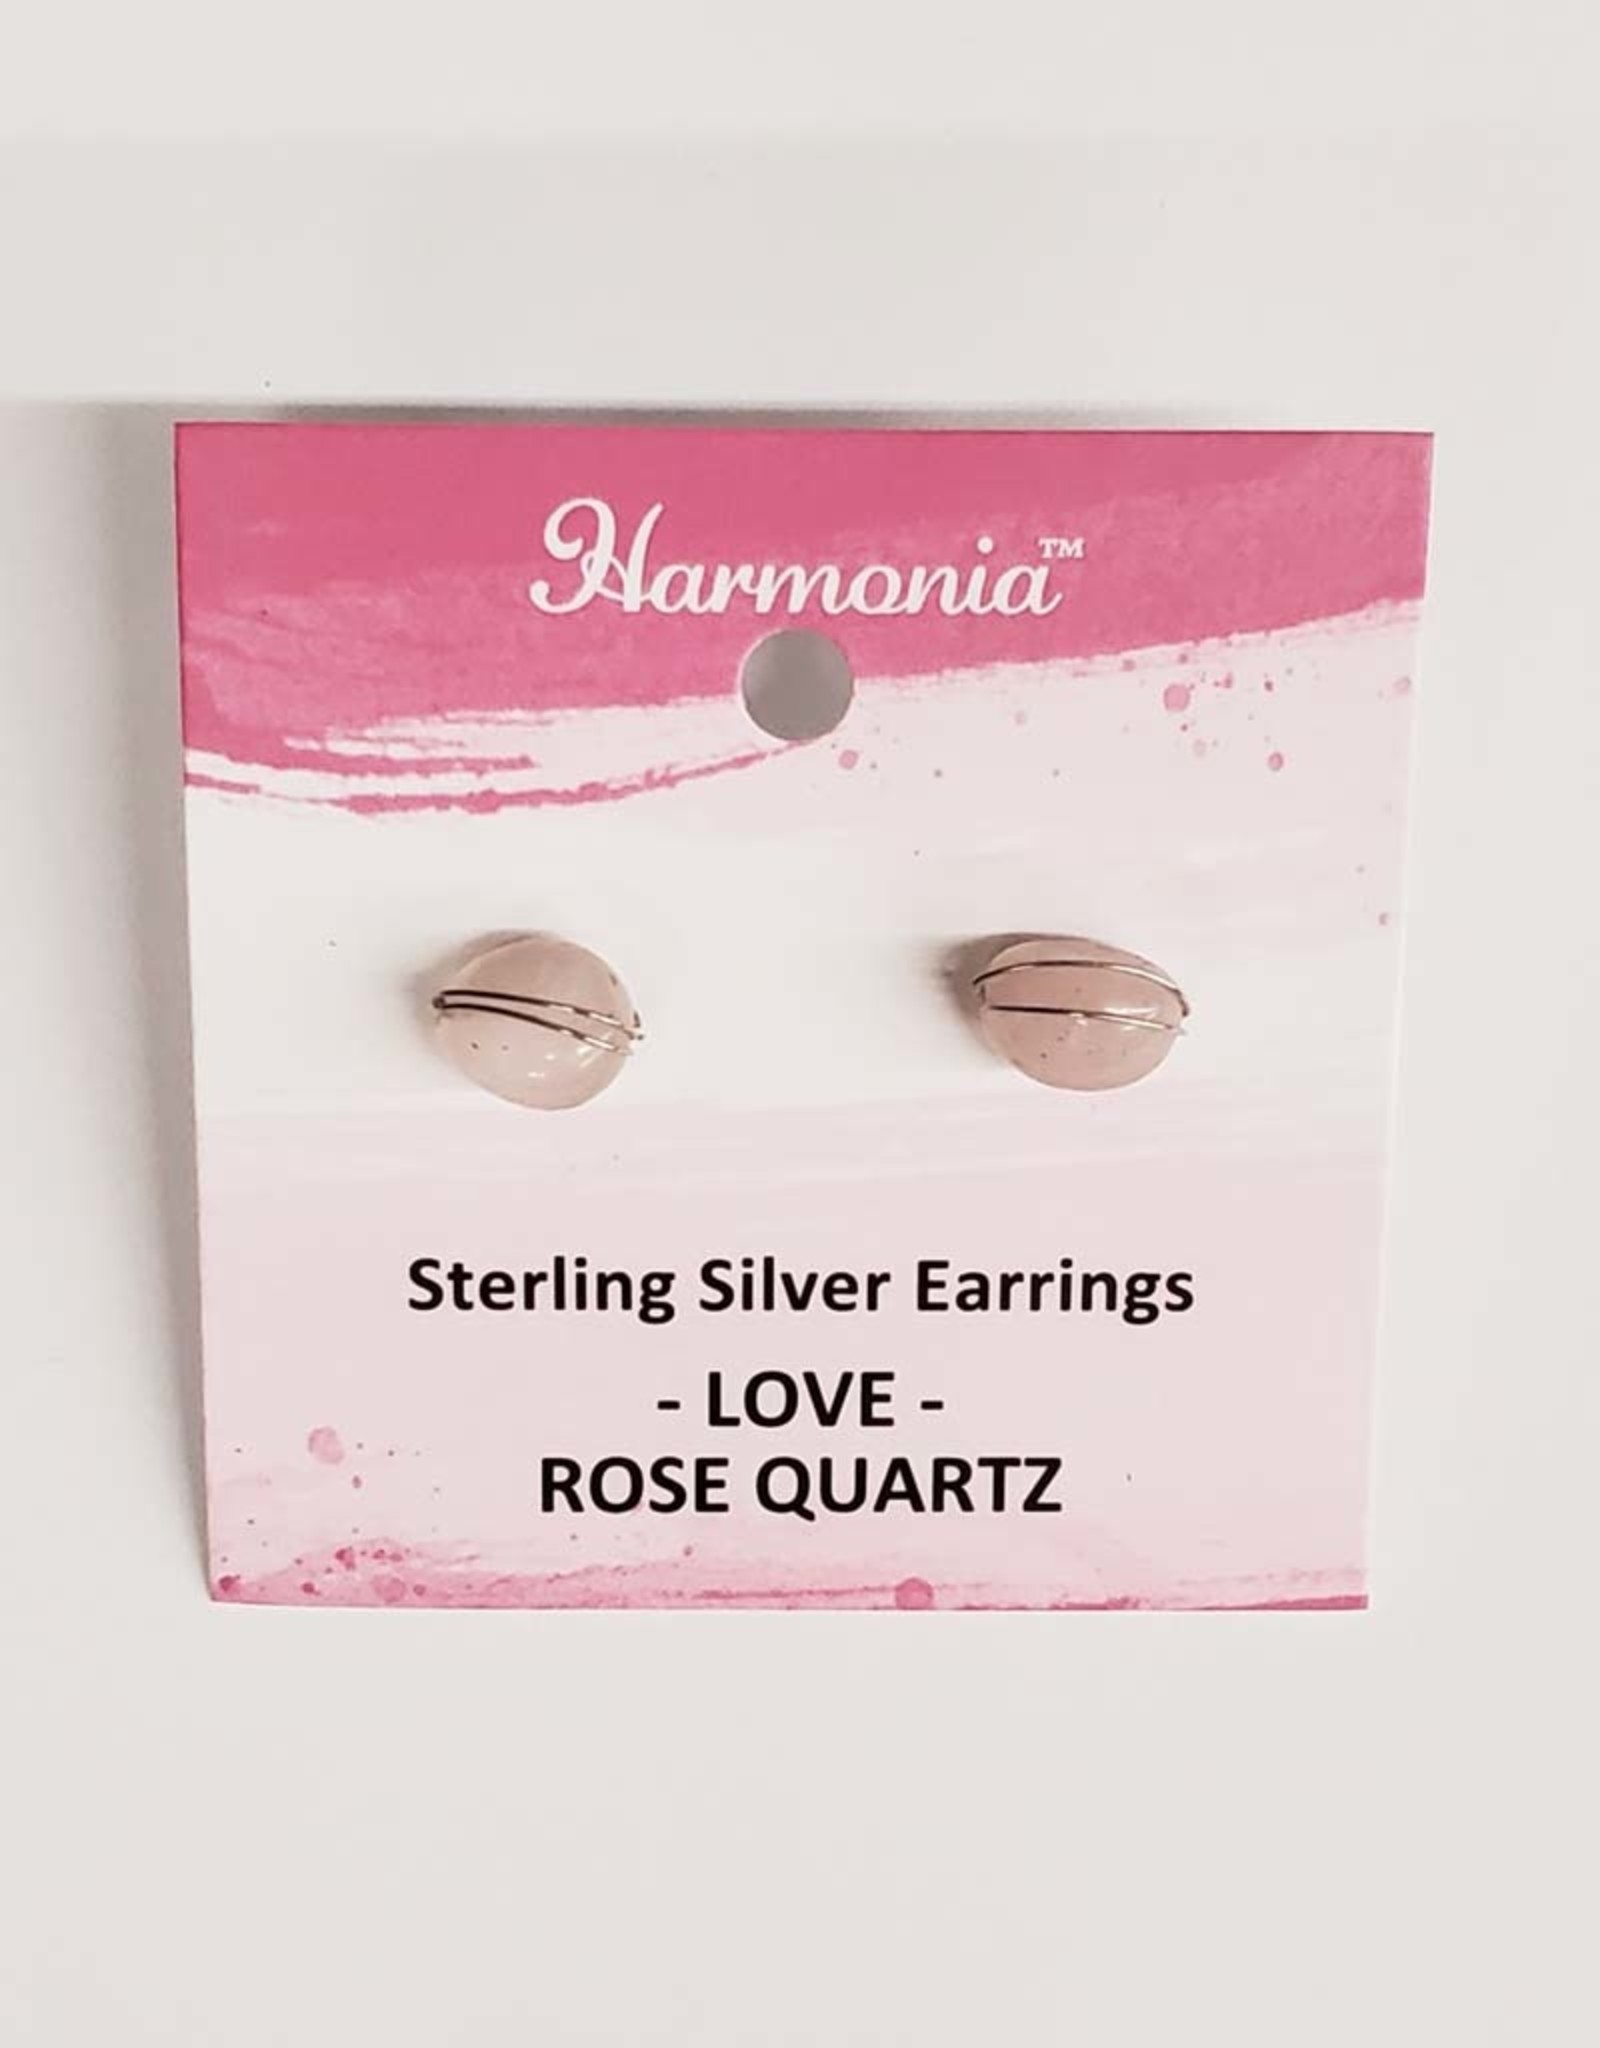 Harmonia Rose Quartz Sterling Silver Earrings